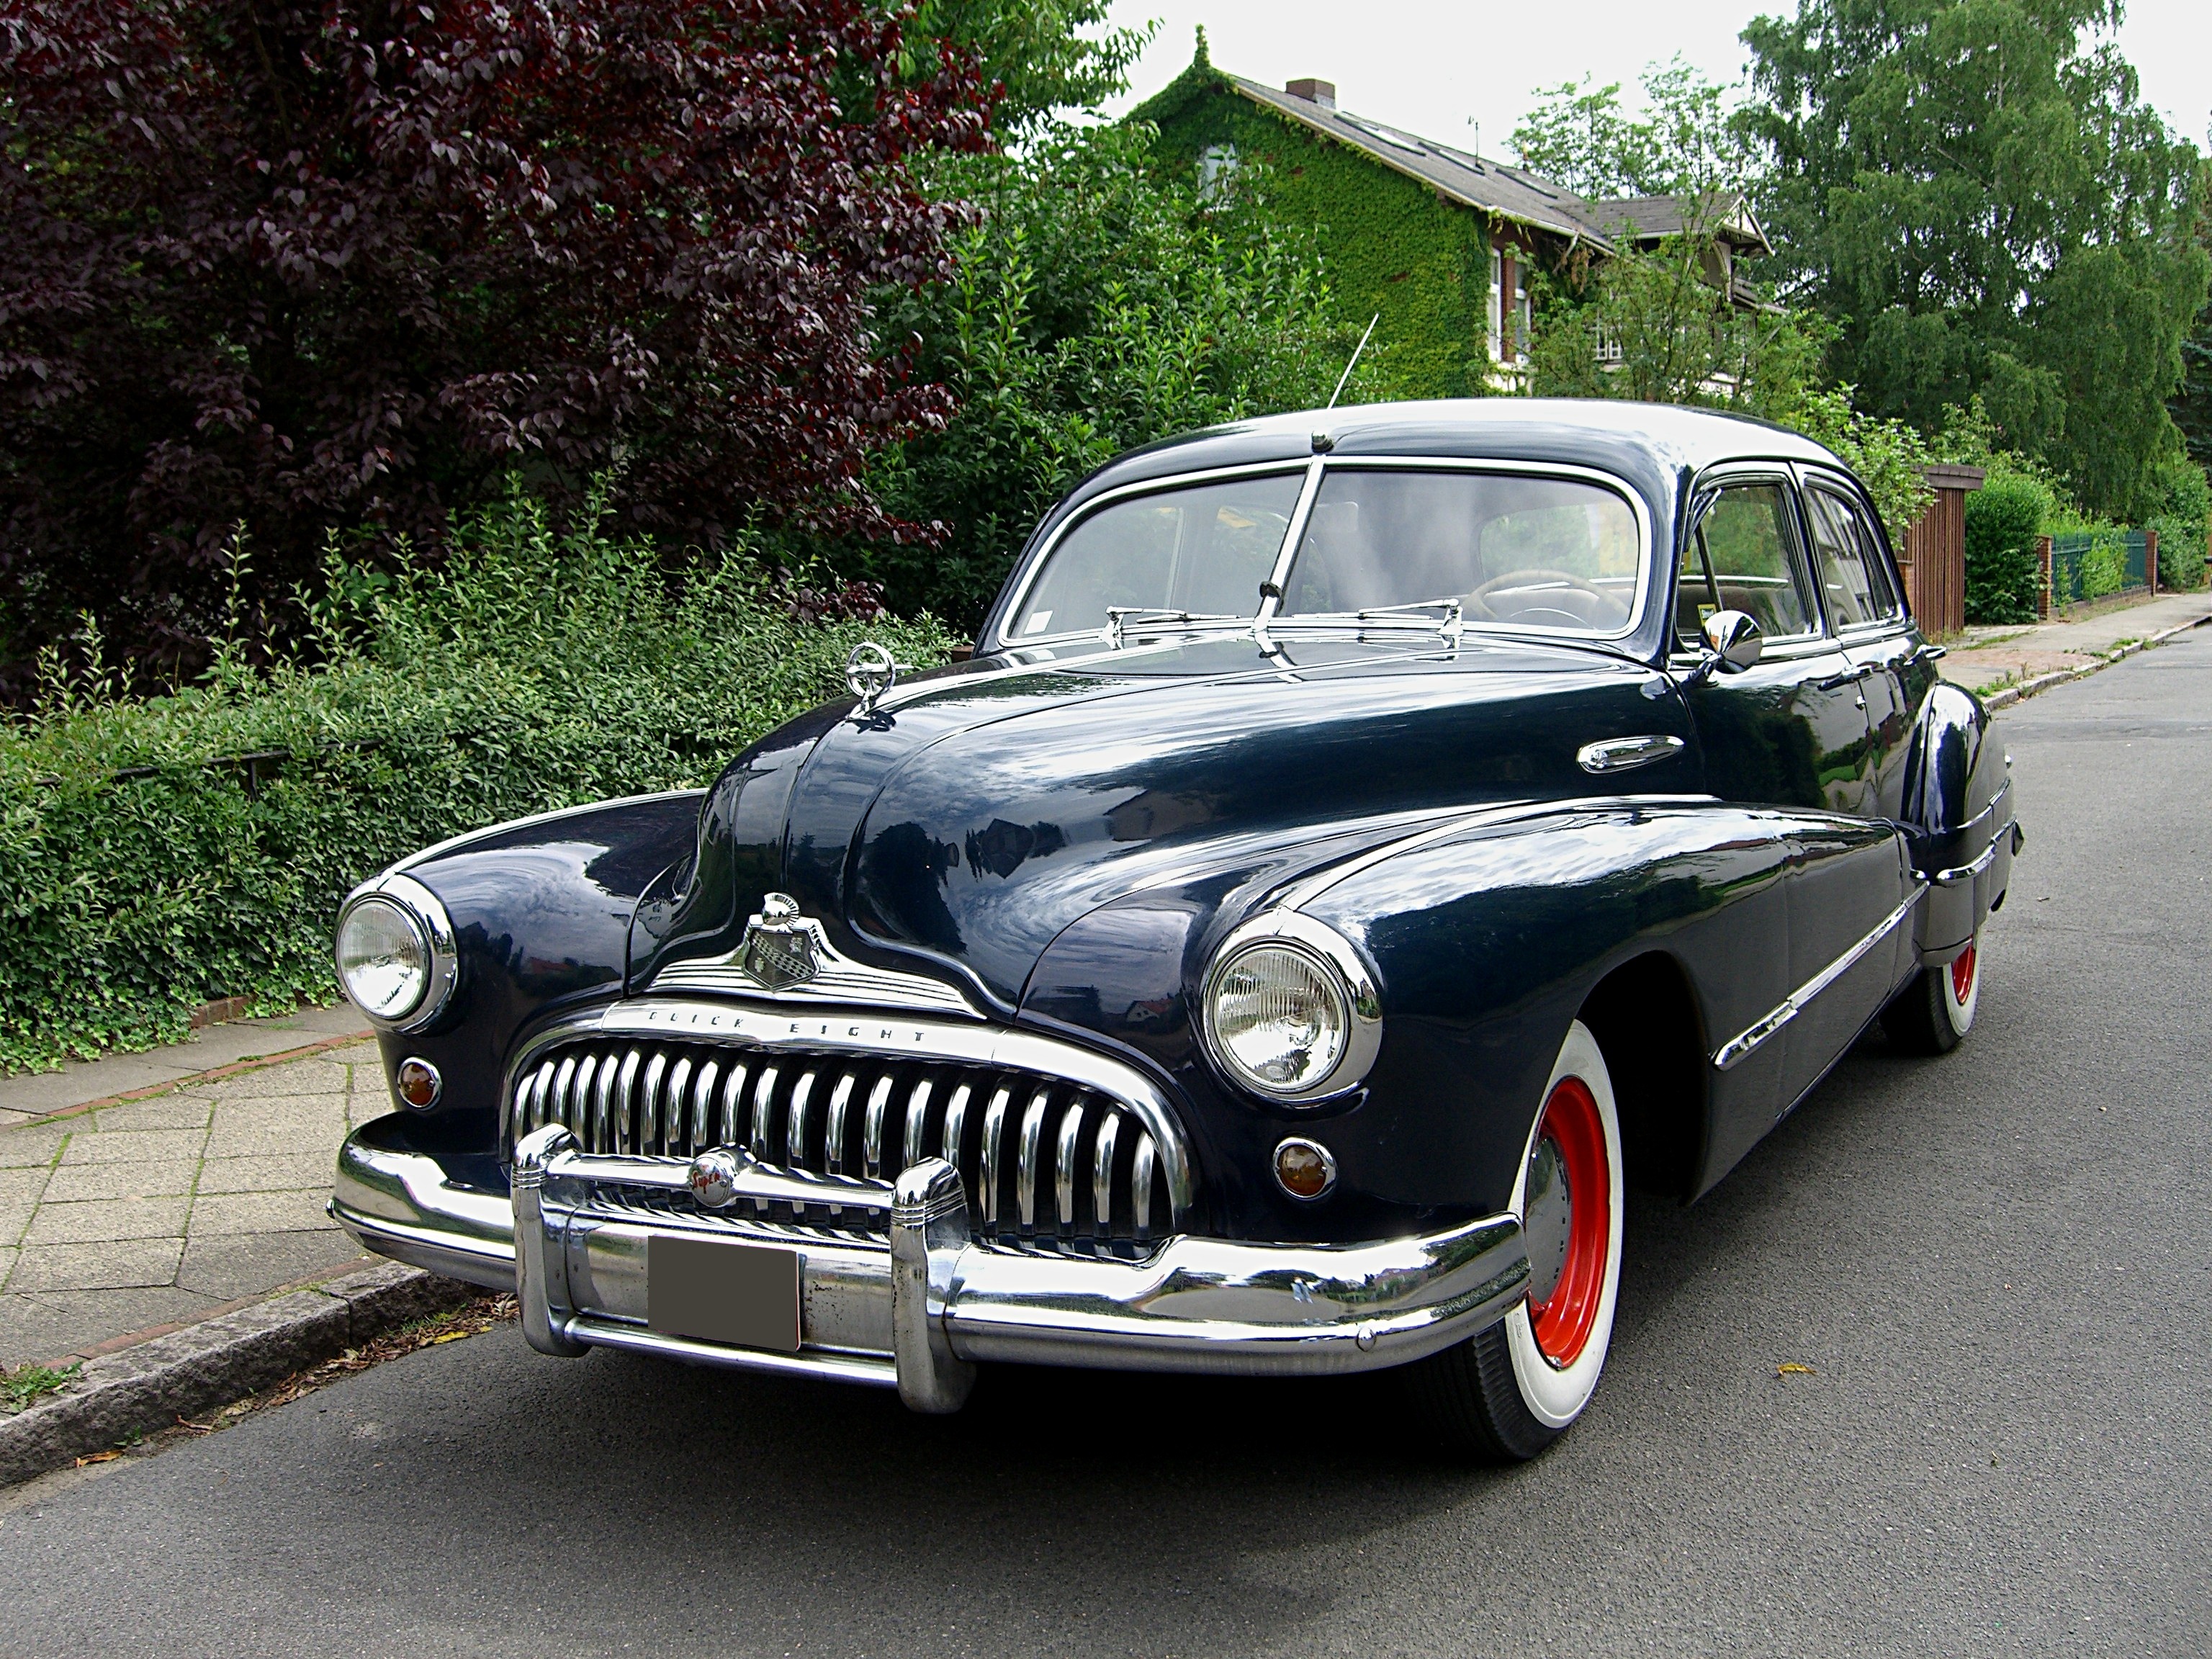 Free Images : auto, classic car, motor vehicle, vintage car, sedan ...